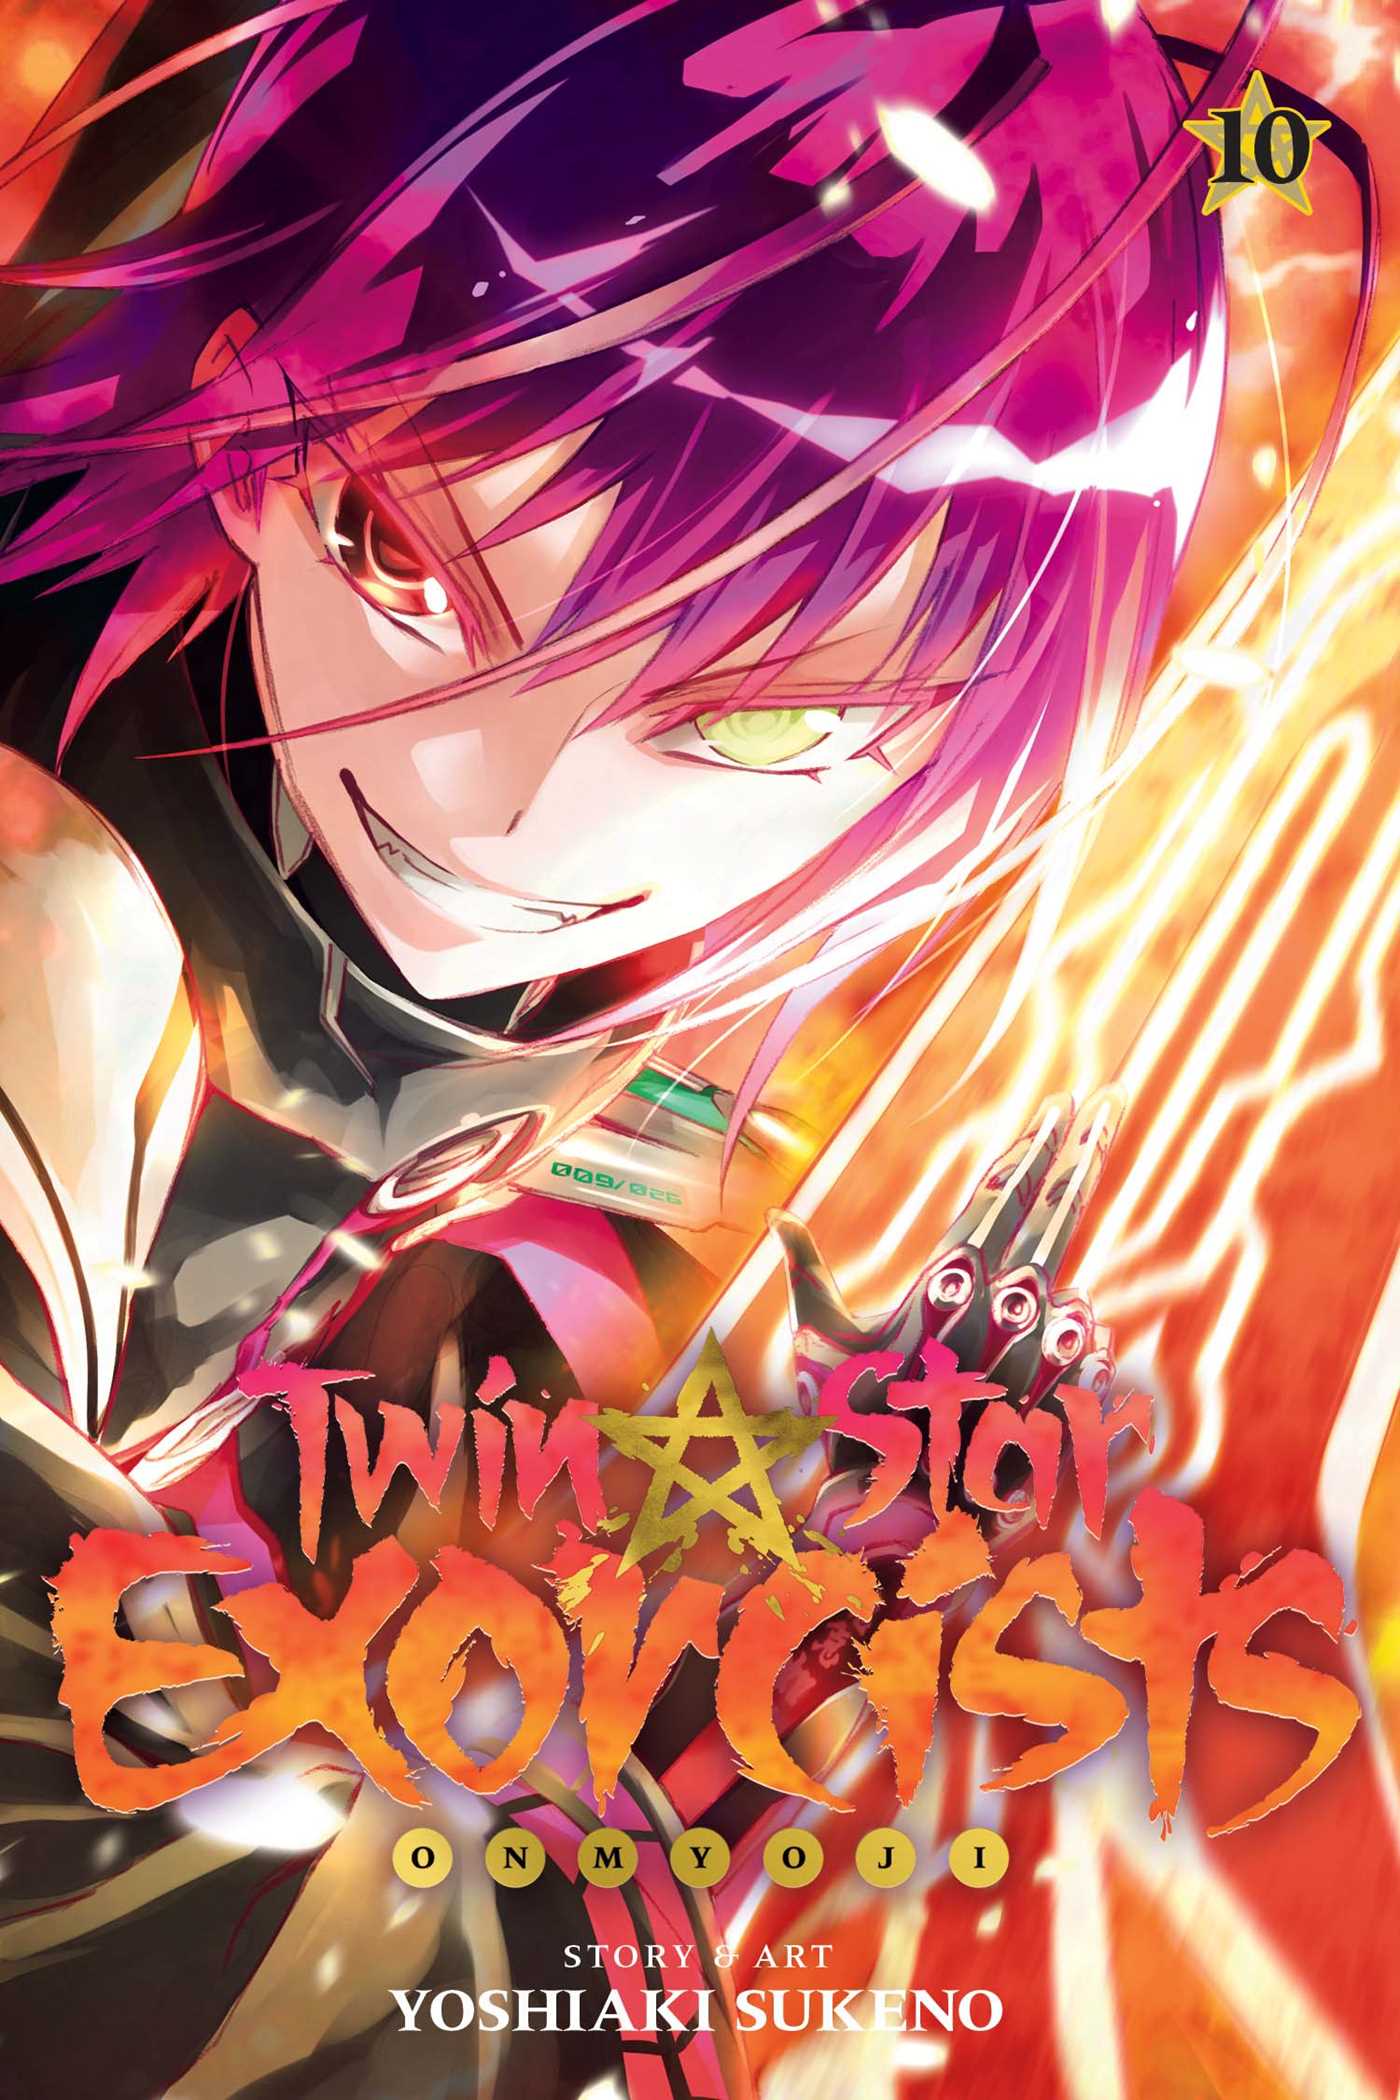 Twin Star Exorcists Manga Volume 6